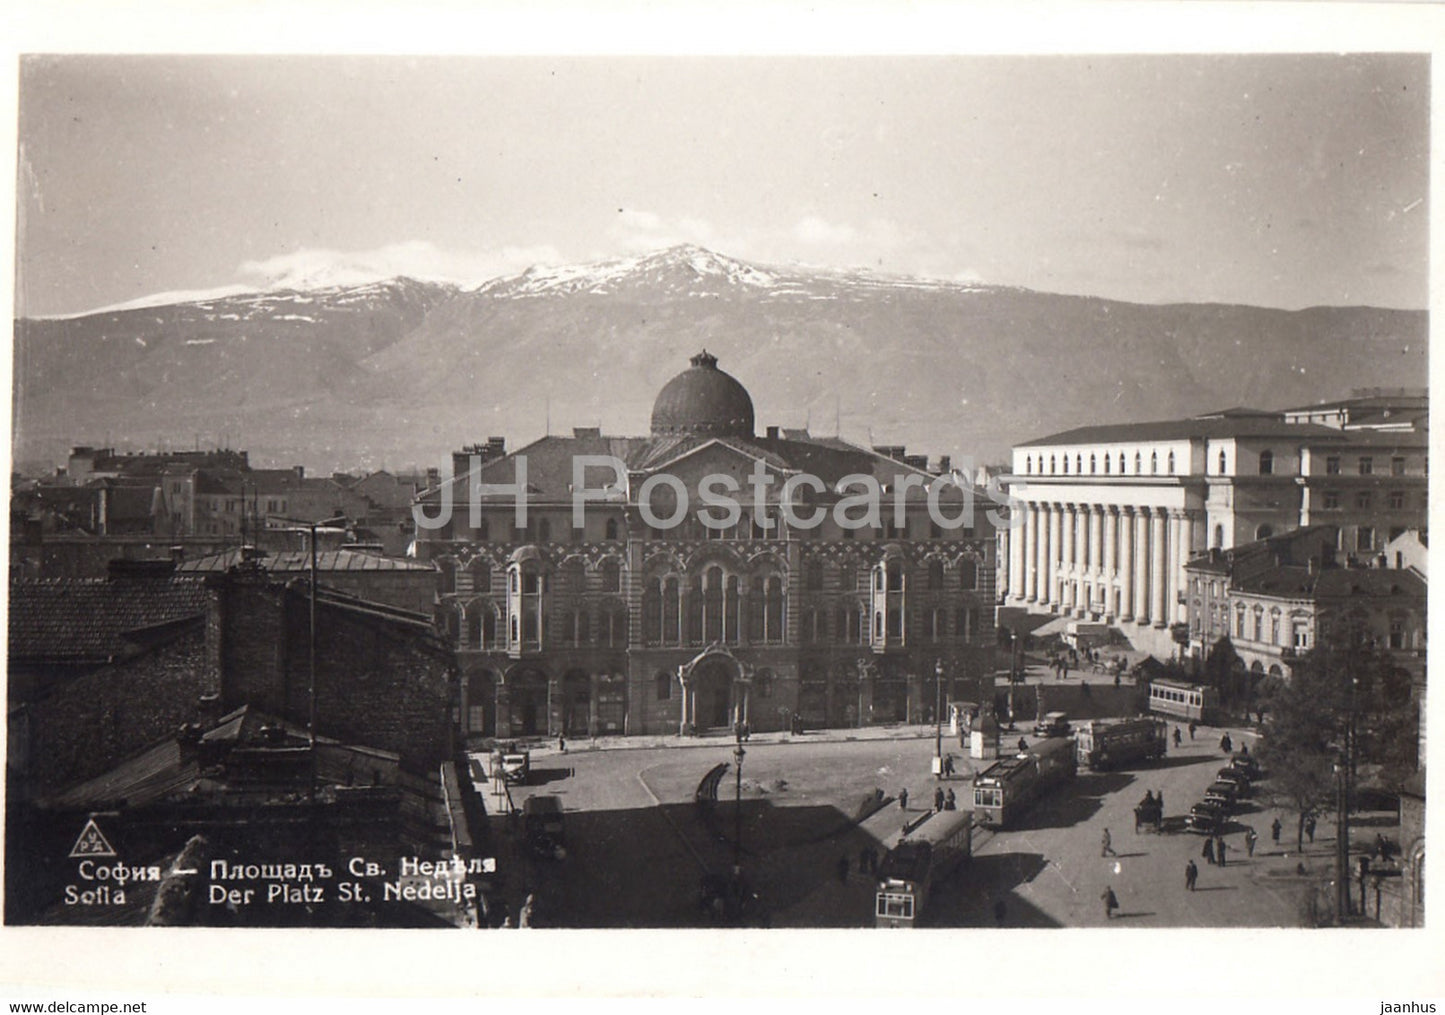 Sofia - Der Platz St Nedelja - tram - old postcard - Bulgaria - unused - JH Postcards